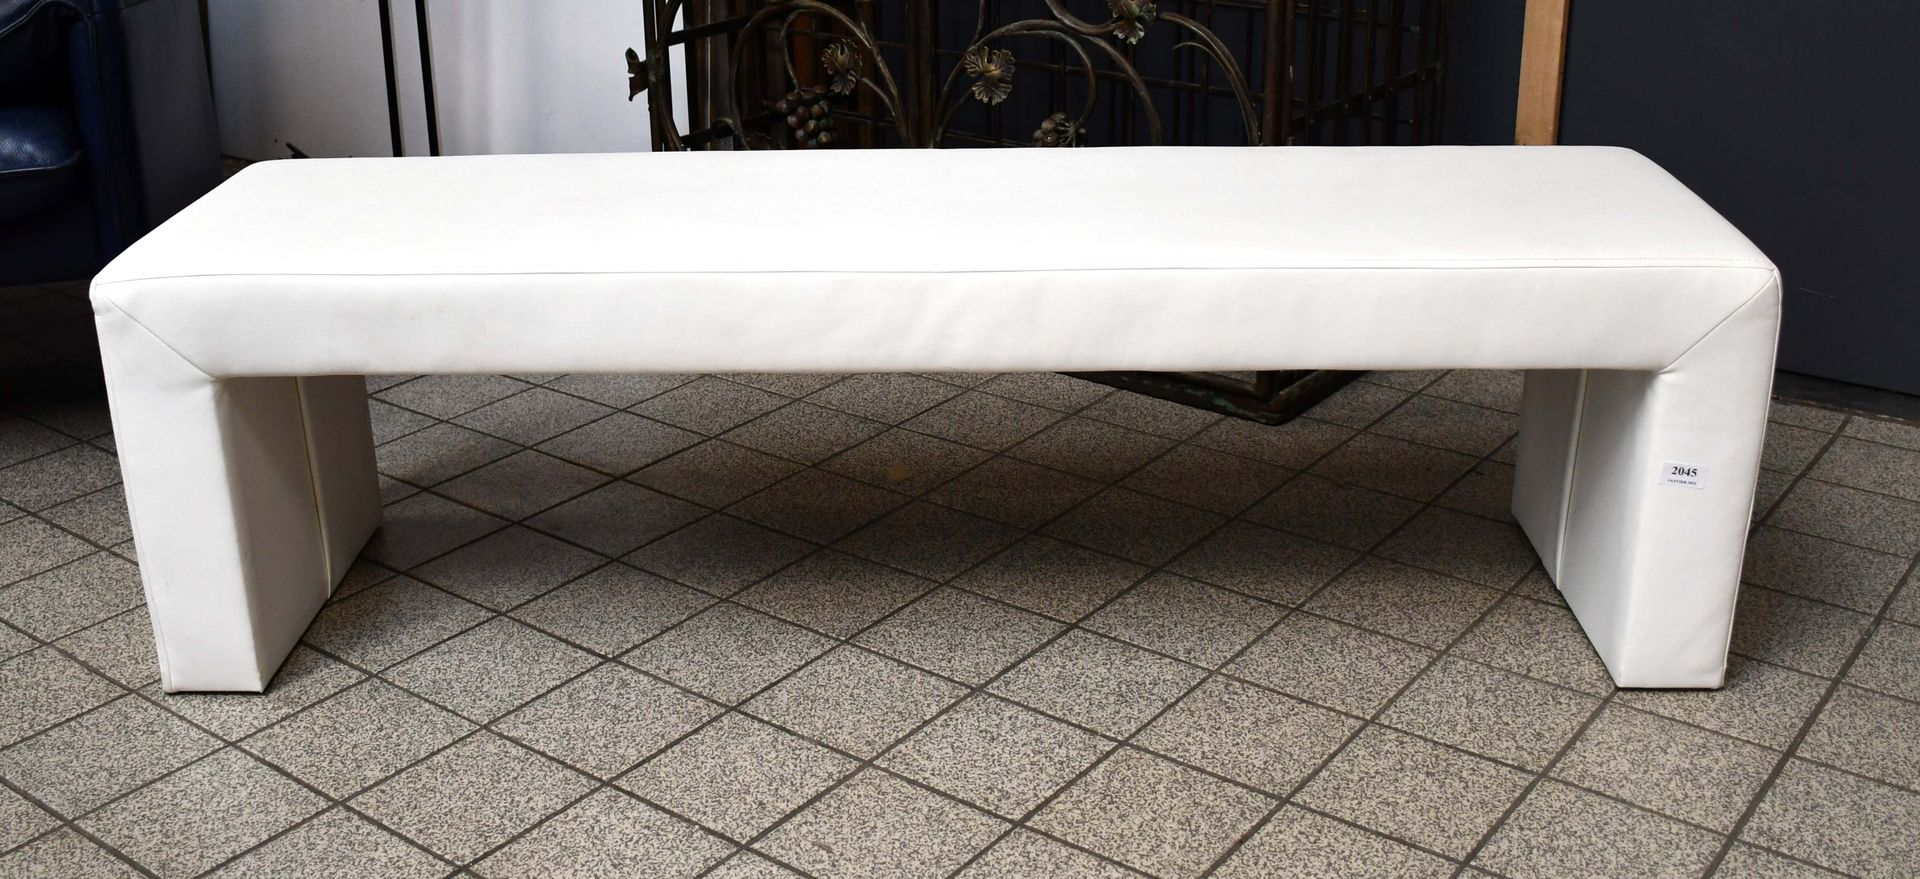 Null Panchina bianca in skai

Lunghezza: 140 cm.